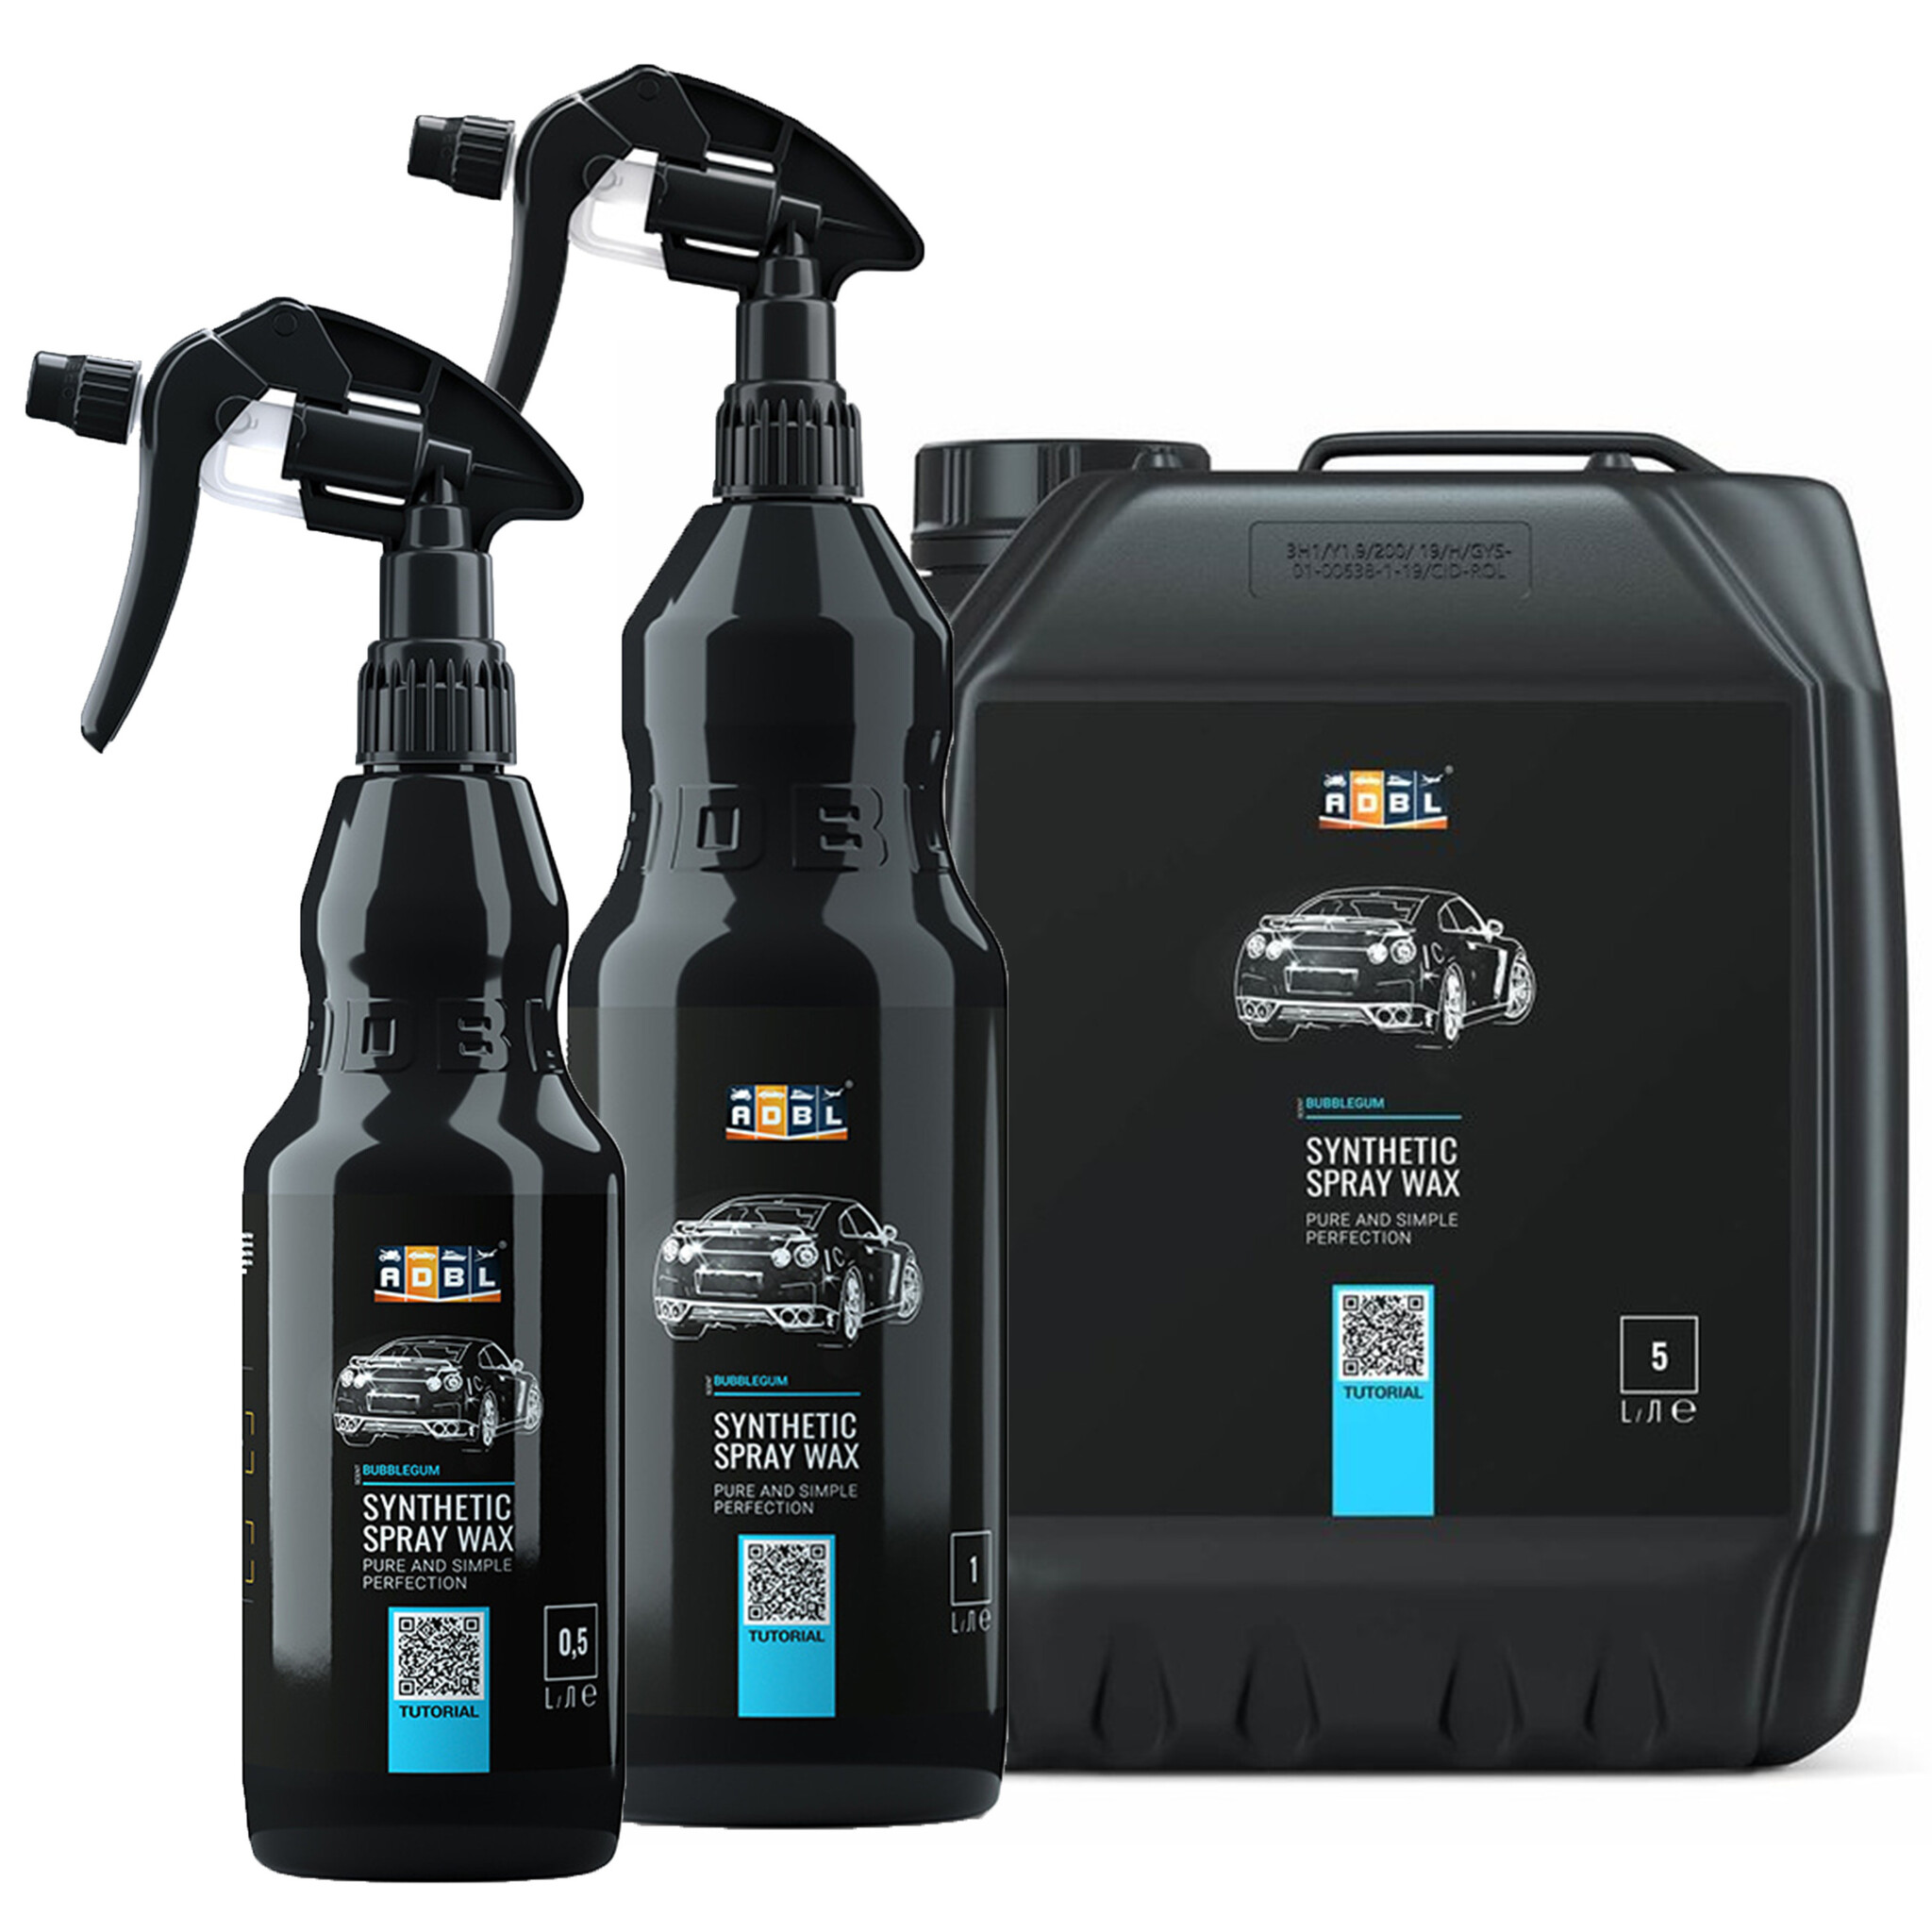 ADBL Synthetic Spray Wax Sprühwachs 1L - Online Kaufen